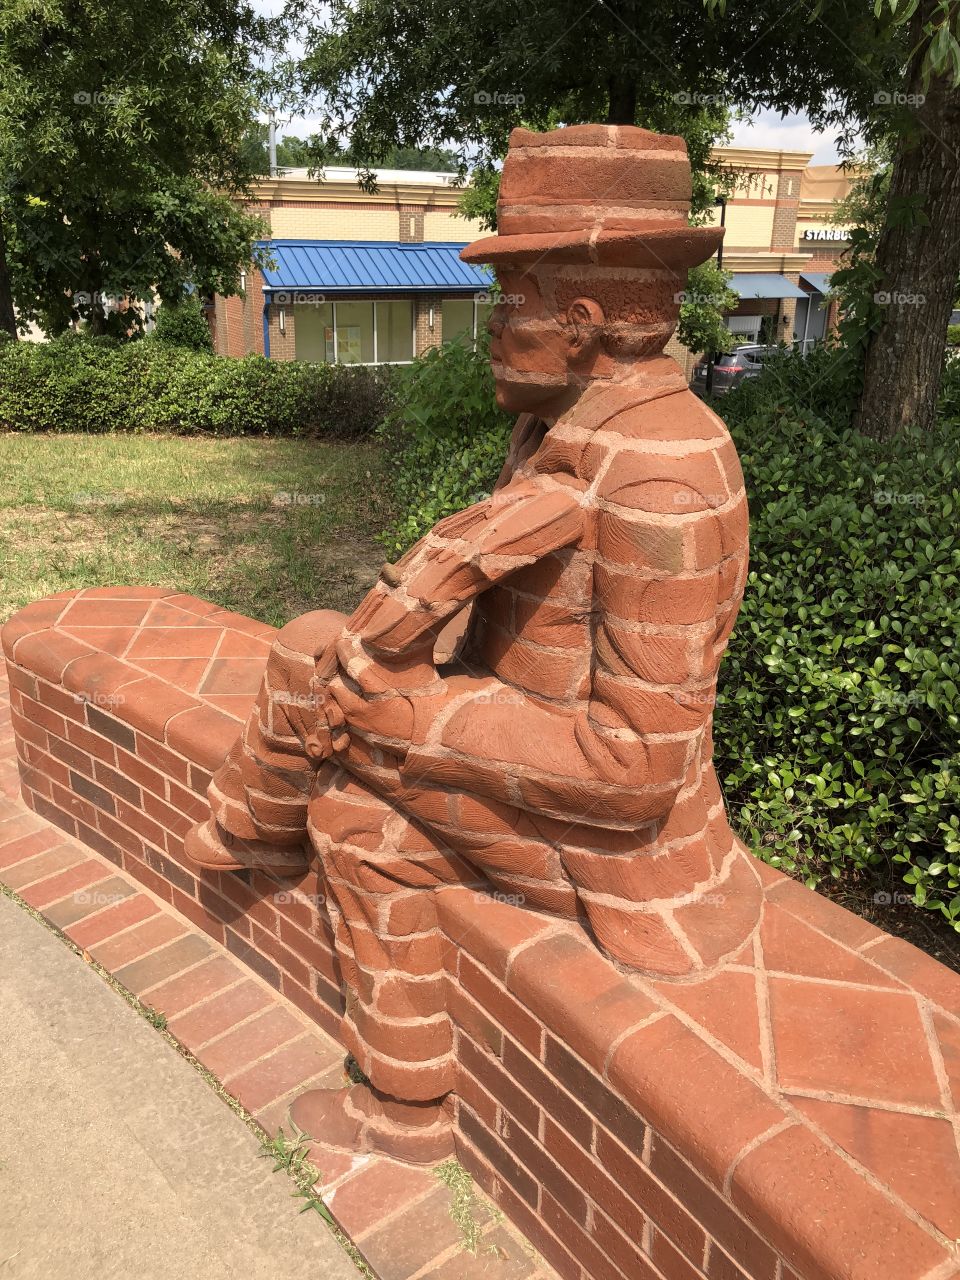 Brick man